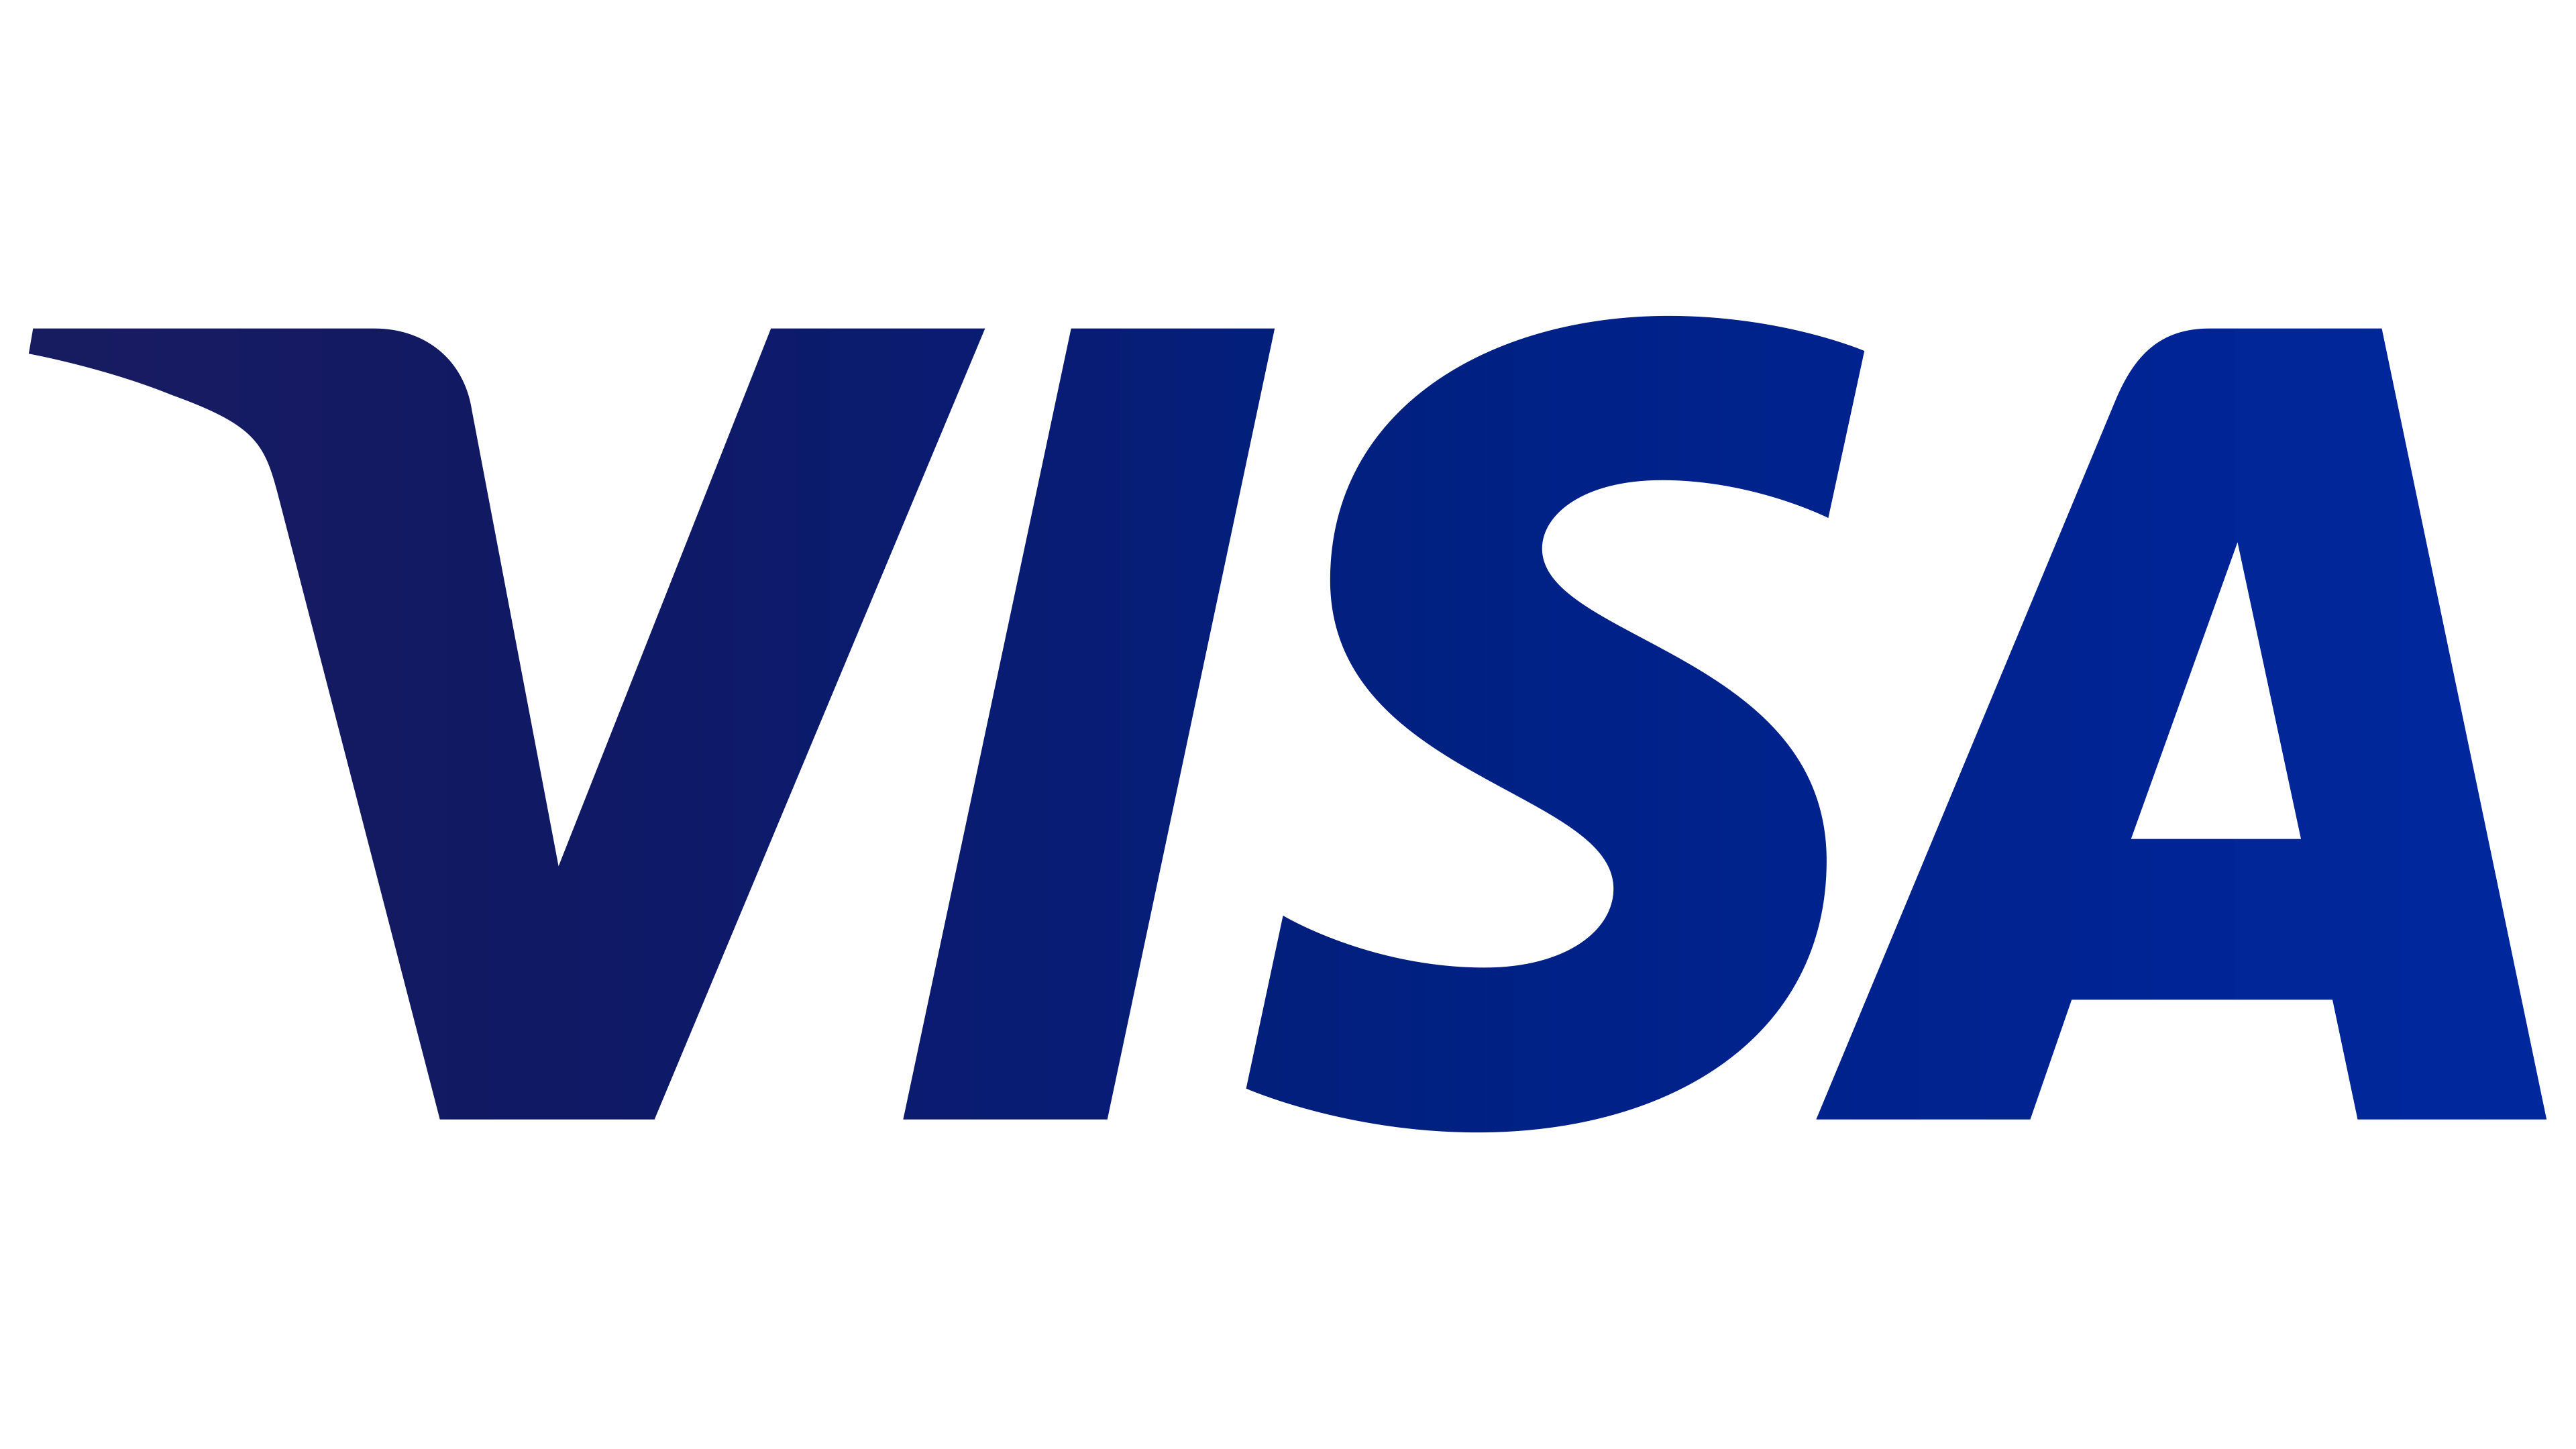 Visa esittelee ”universaalin maksukanavan”